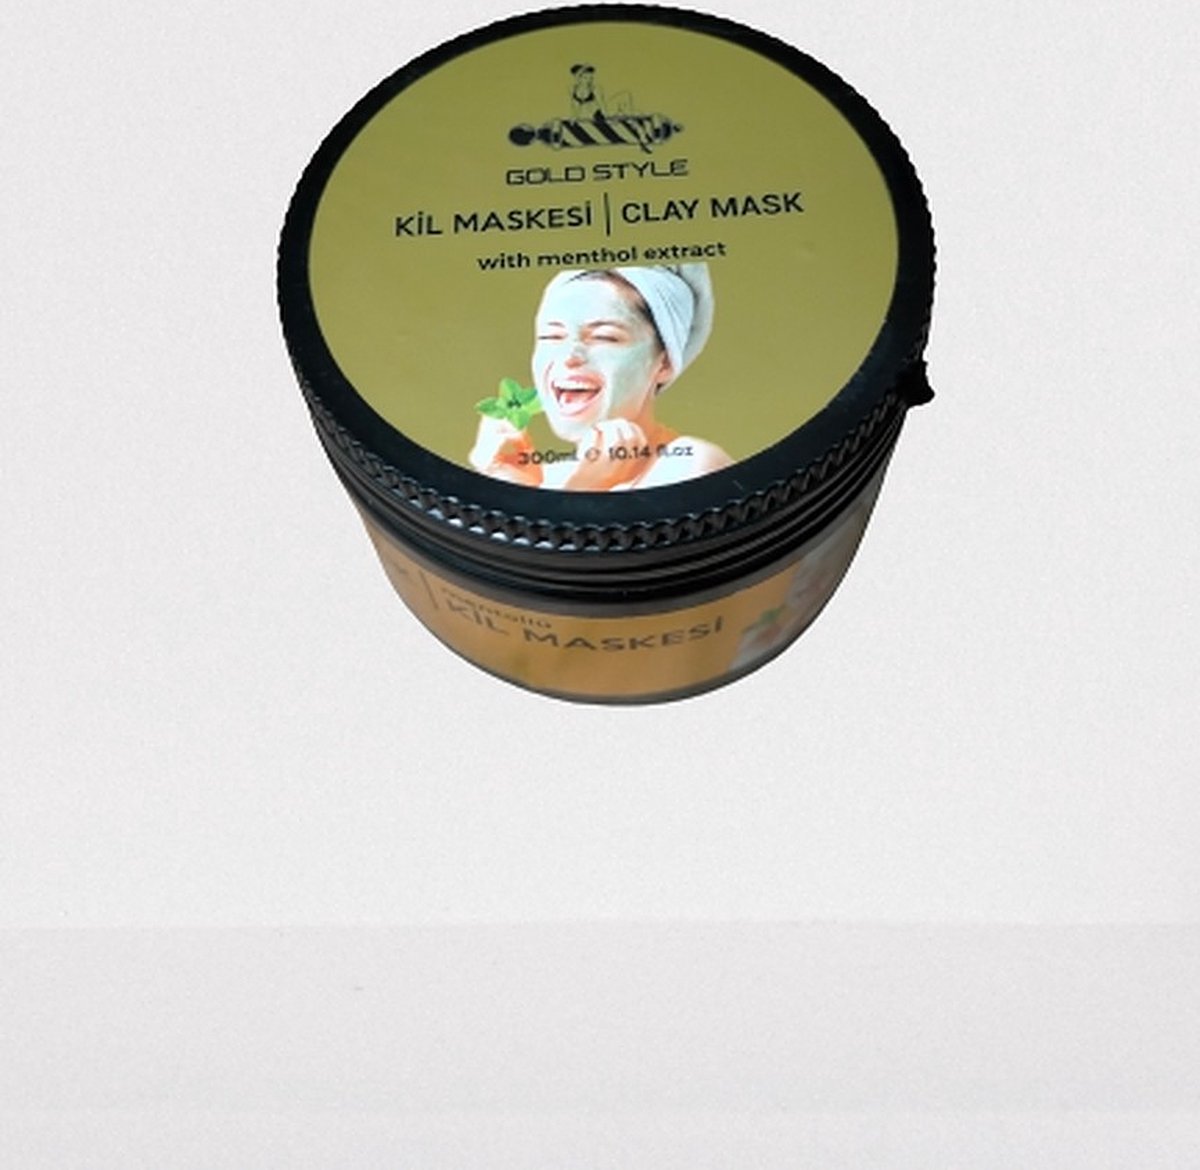 Gold Style Clay Mask - menthol extract - Masker - gezicht verzorging - Clay masker